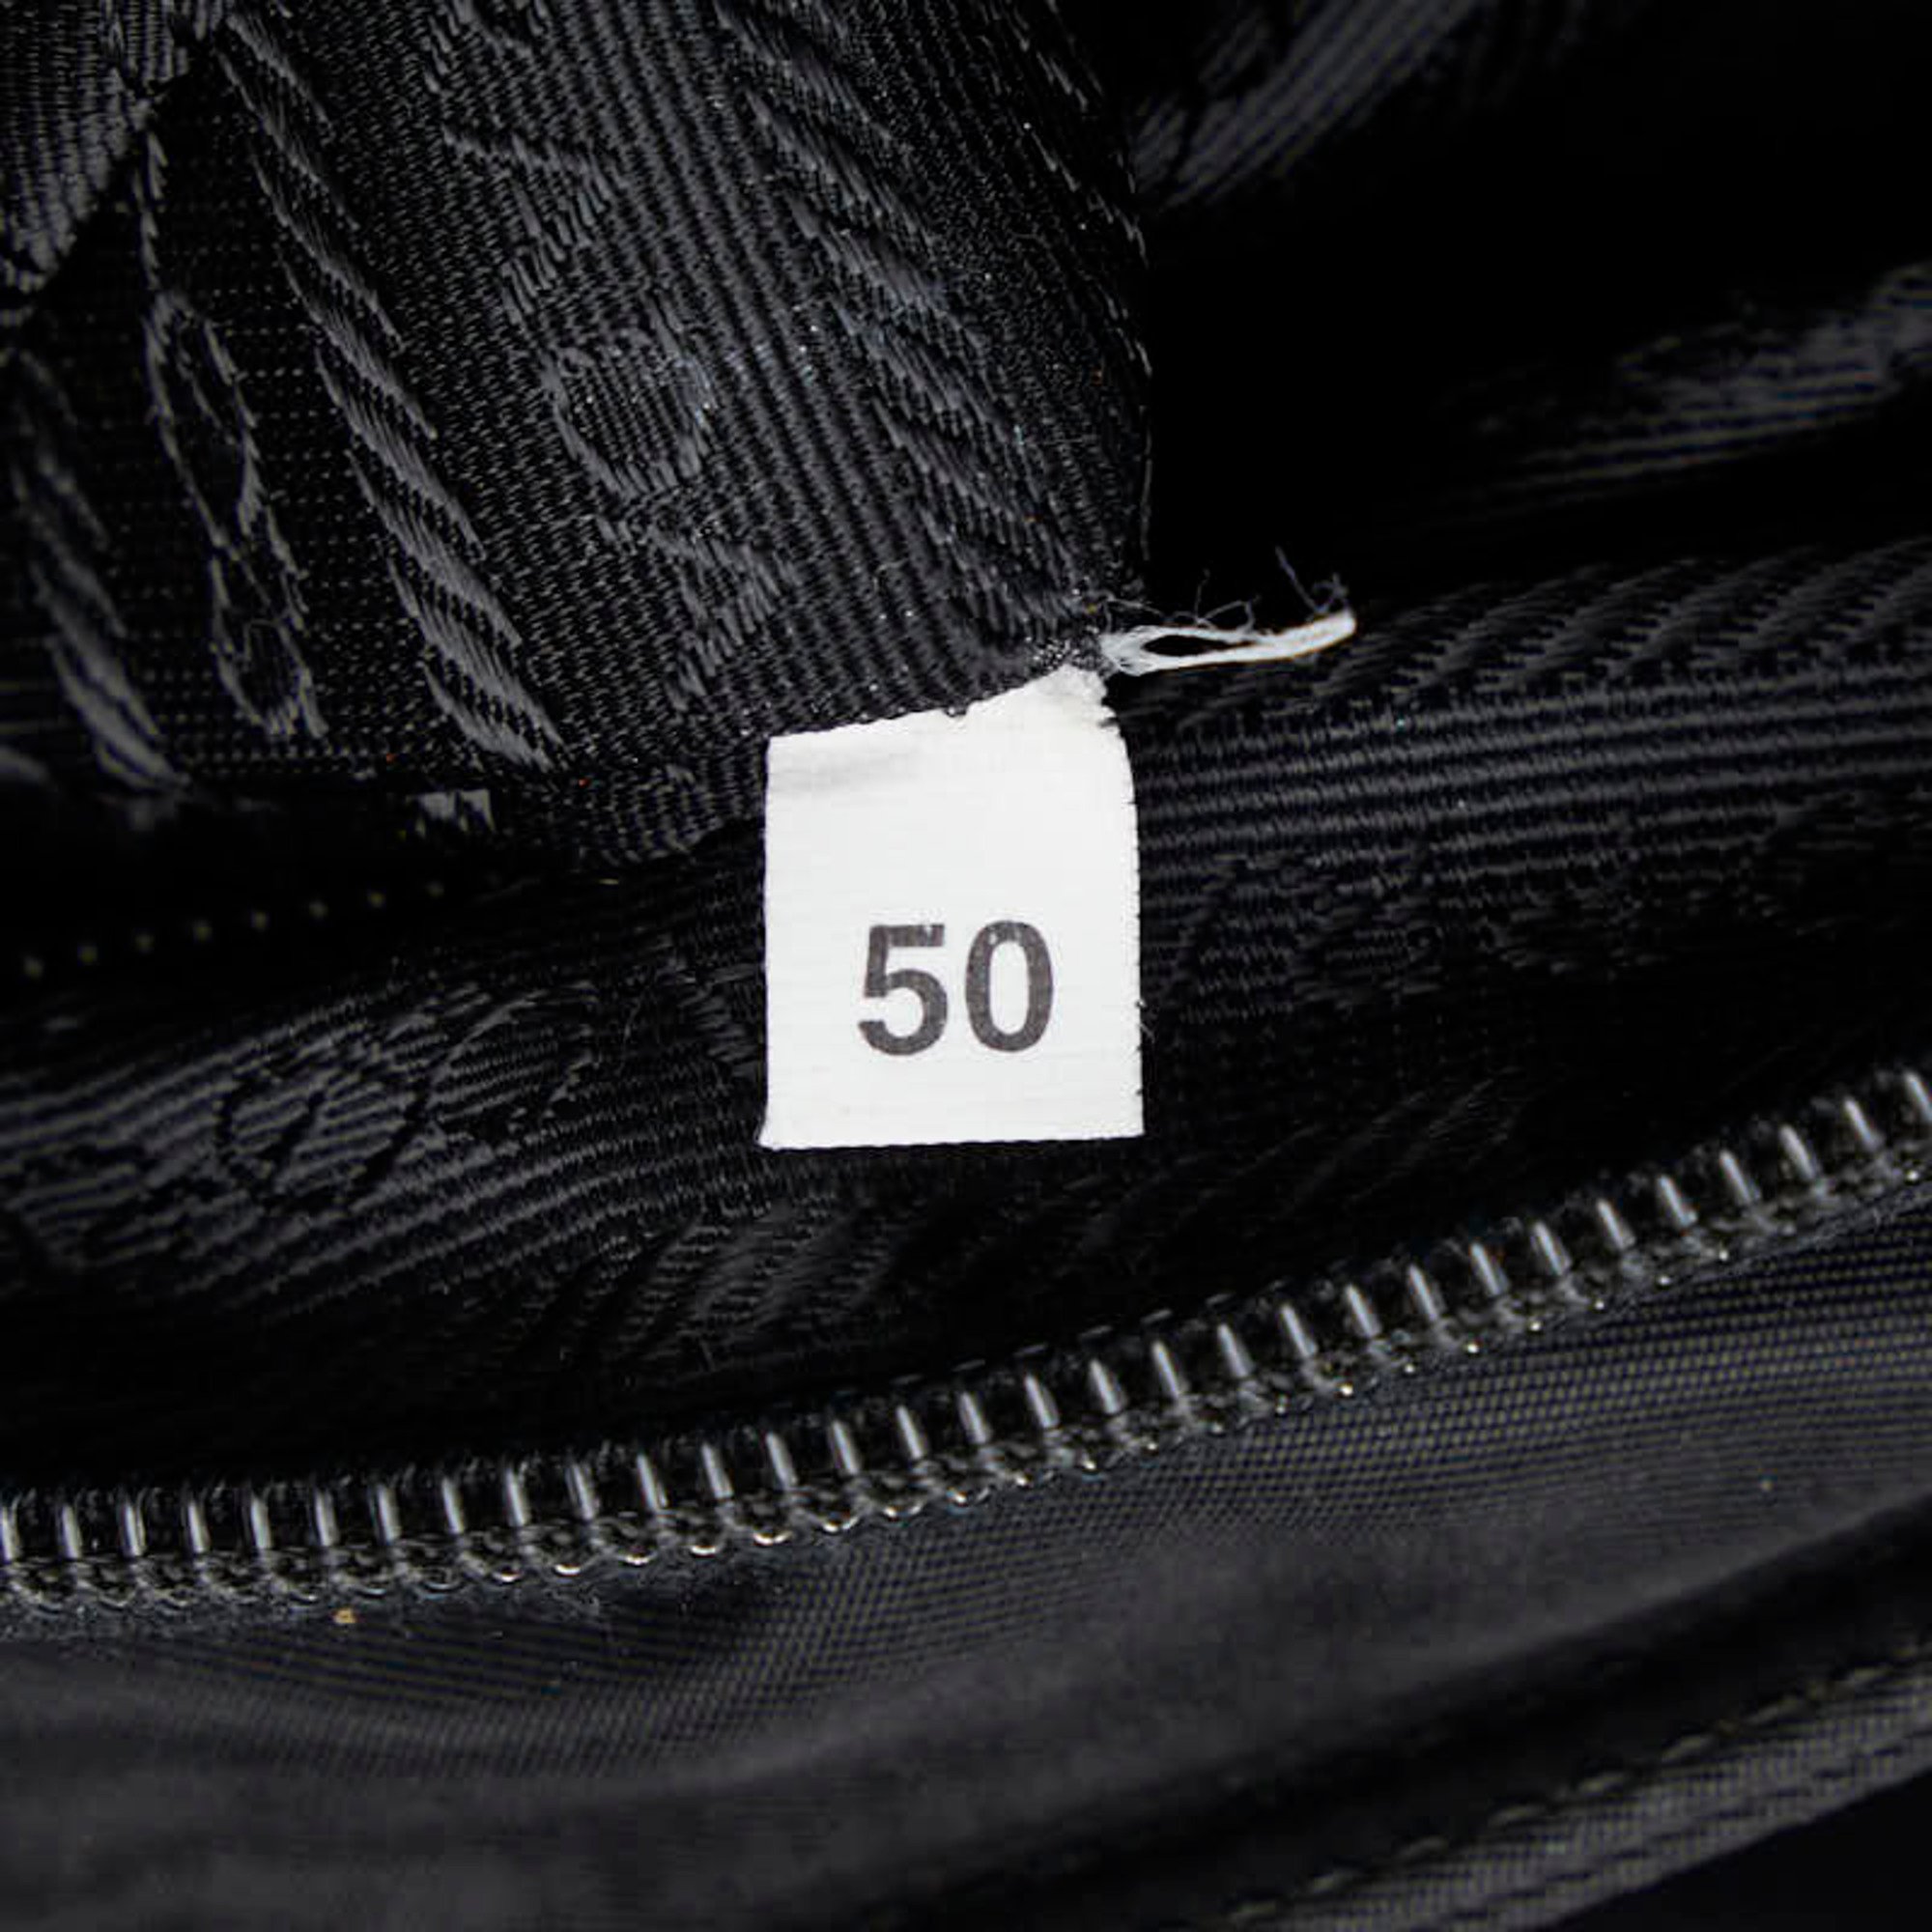 PRADA Triangle Plate Tote Bag Shoulder Black Nylon Women's